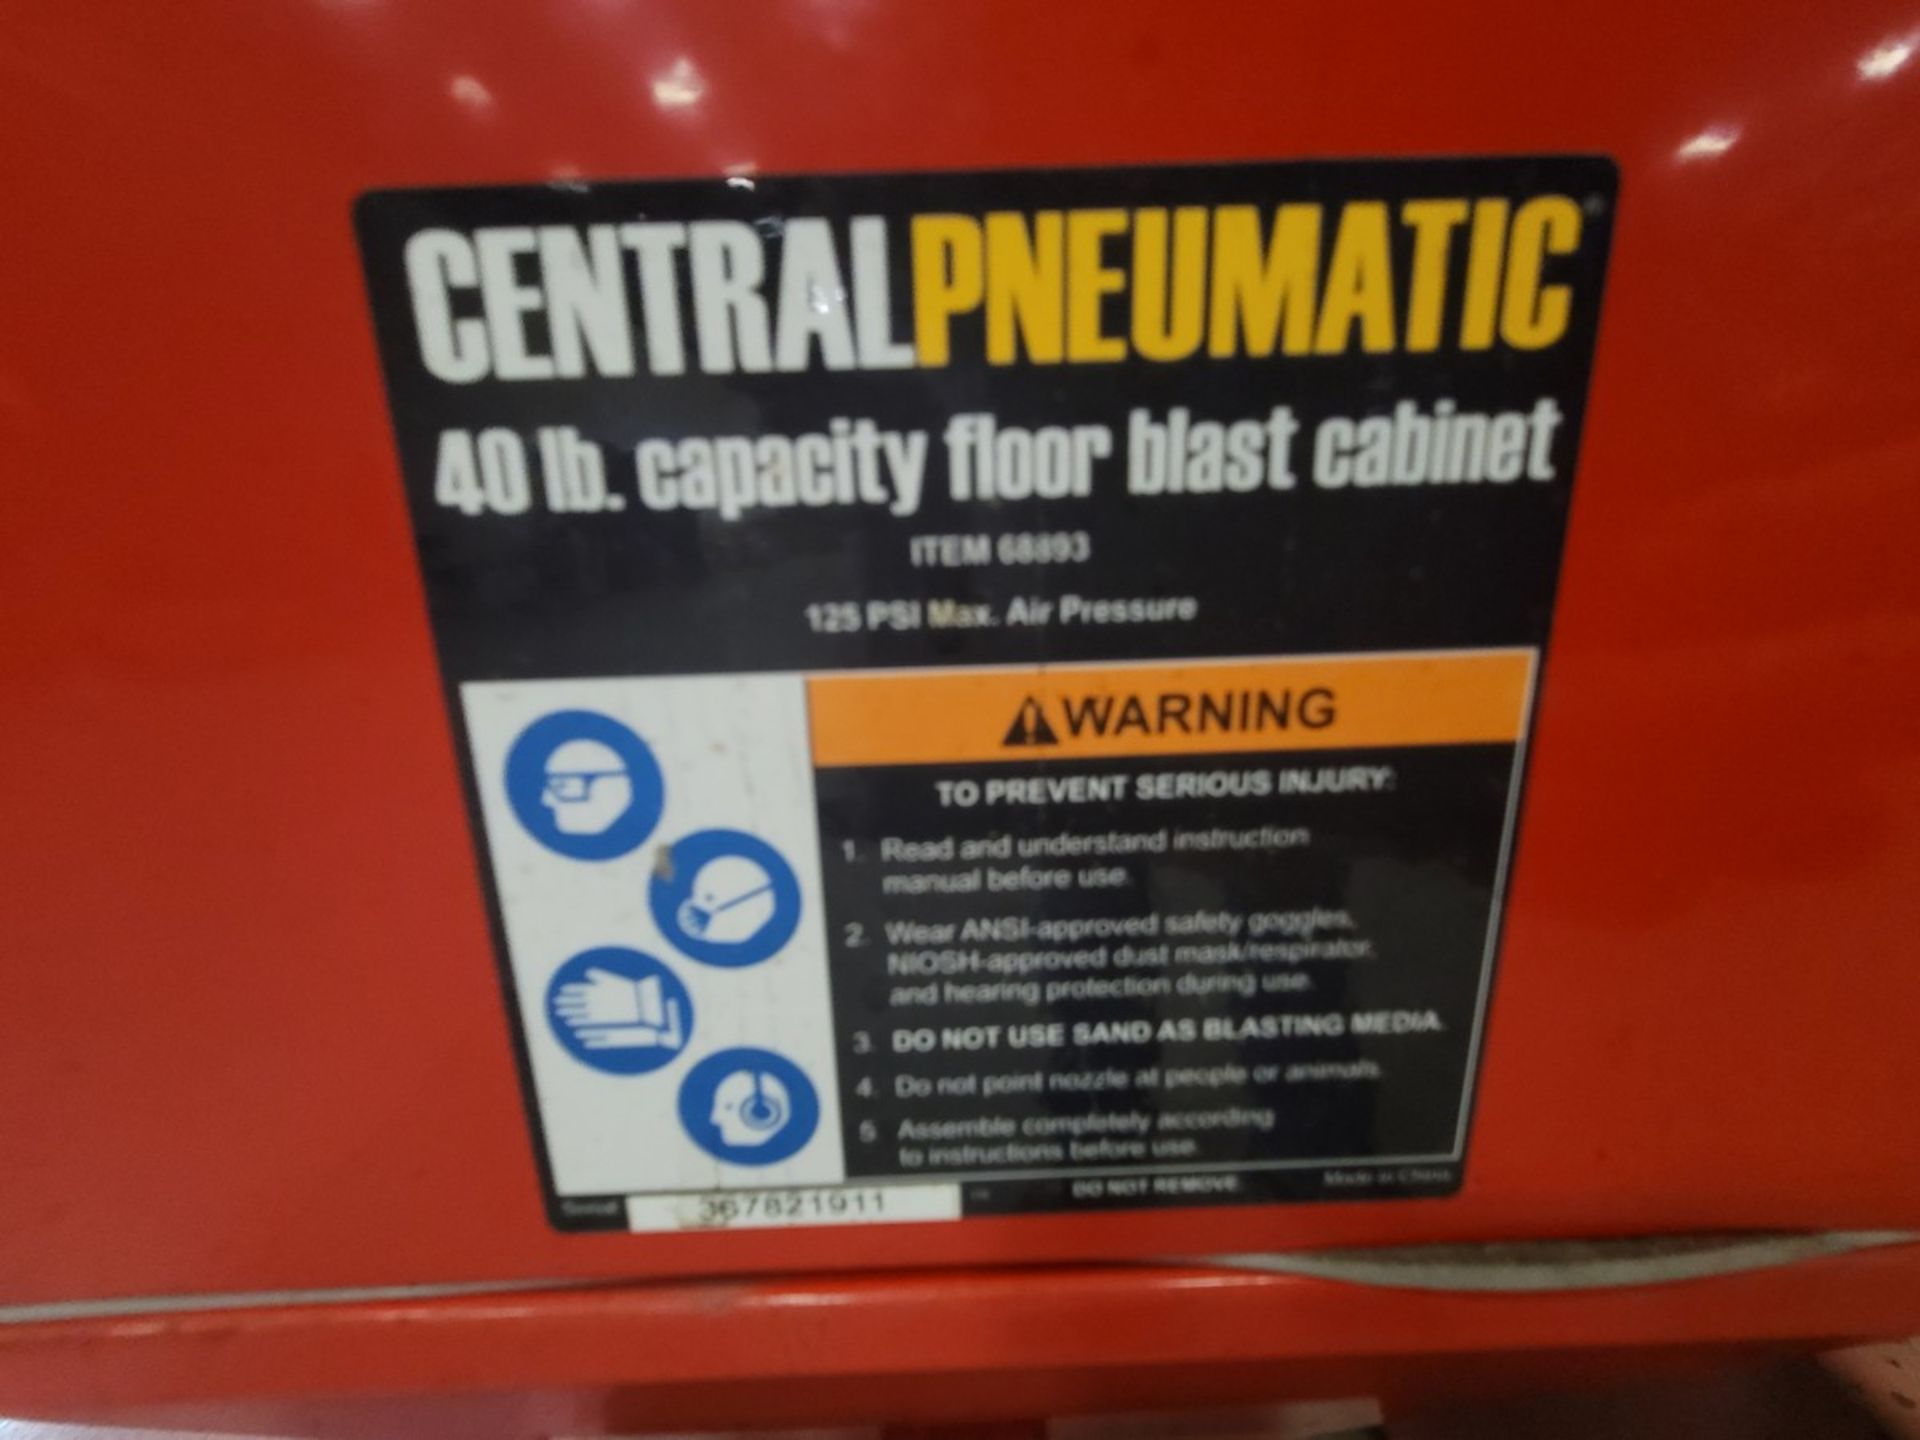 Central Pneumatic 40 Lb. Capacity Floor Blast Cabinet - Image 2 of 2